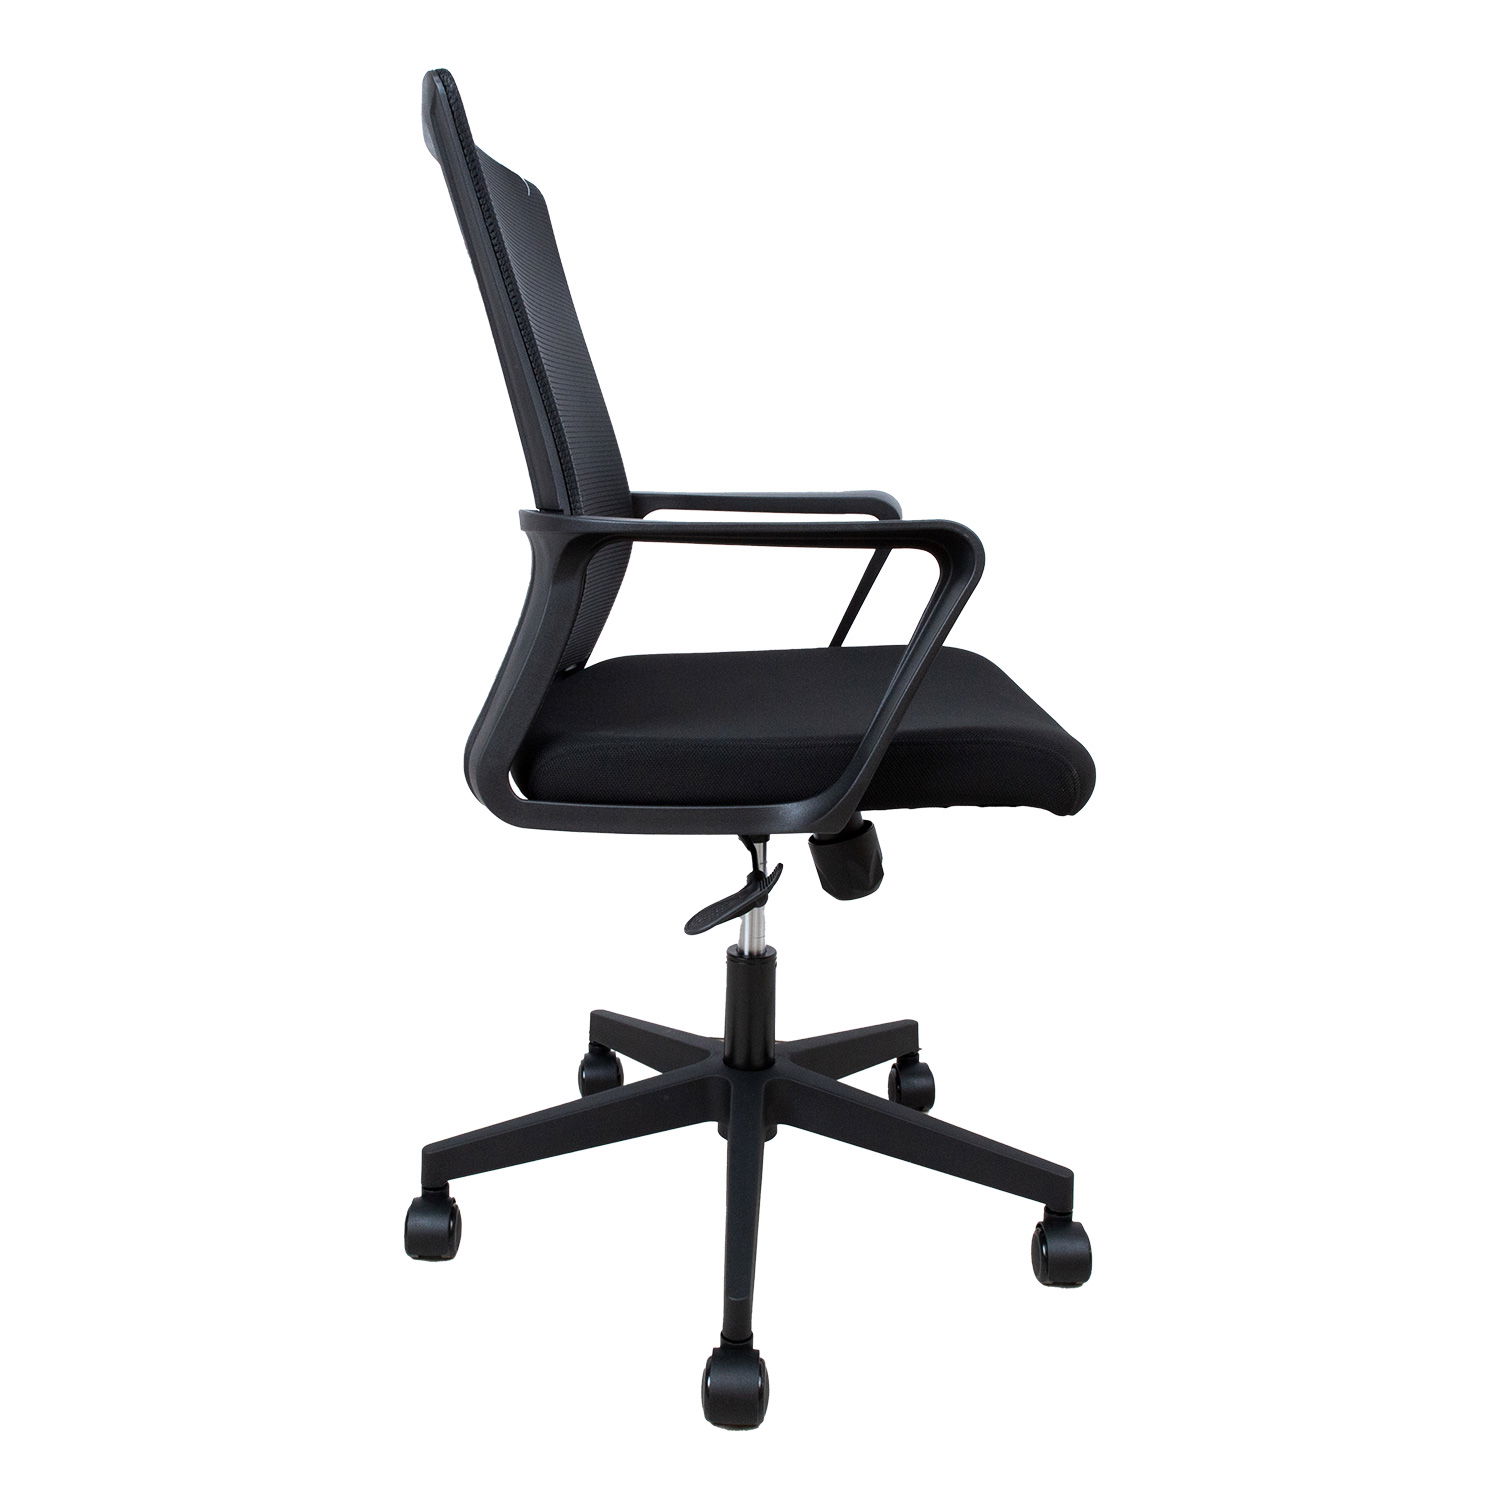 Biuro kėdė EMMA, 57x65x98-104 cm, juoda-2